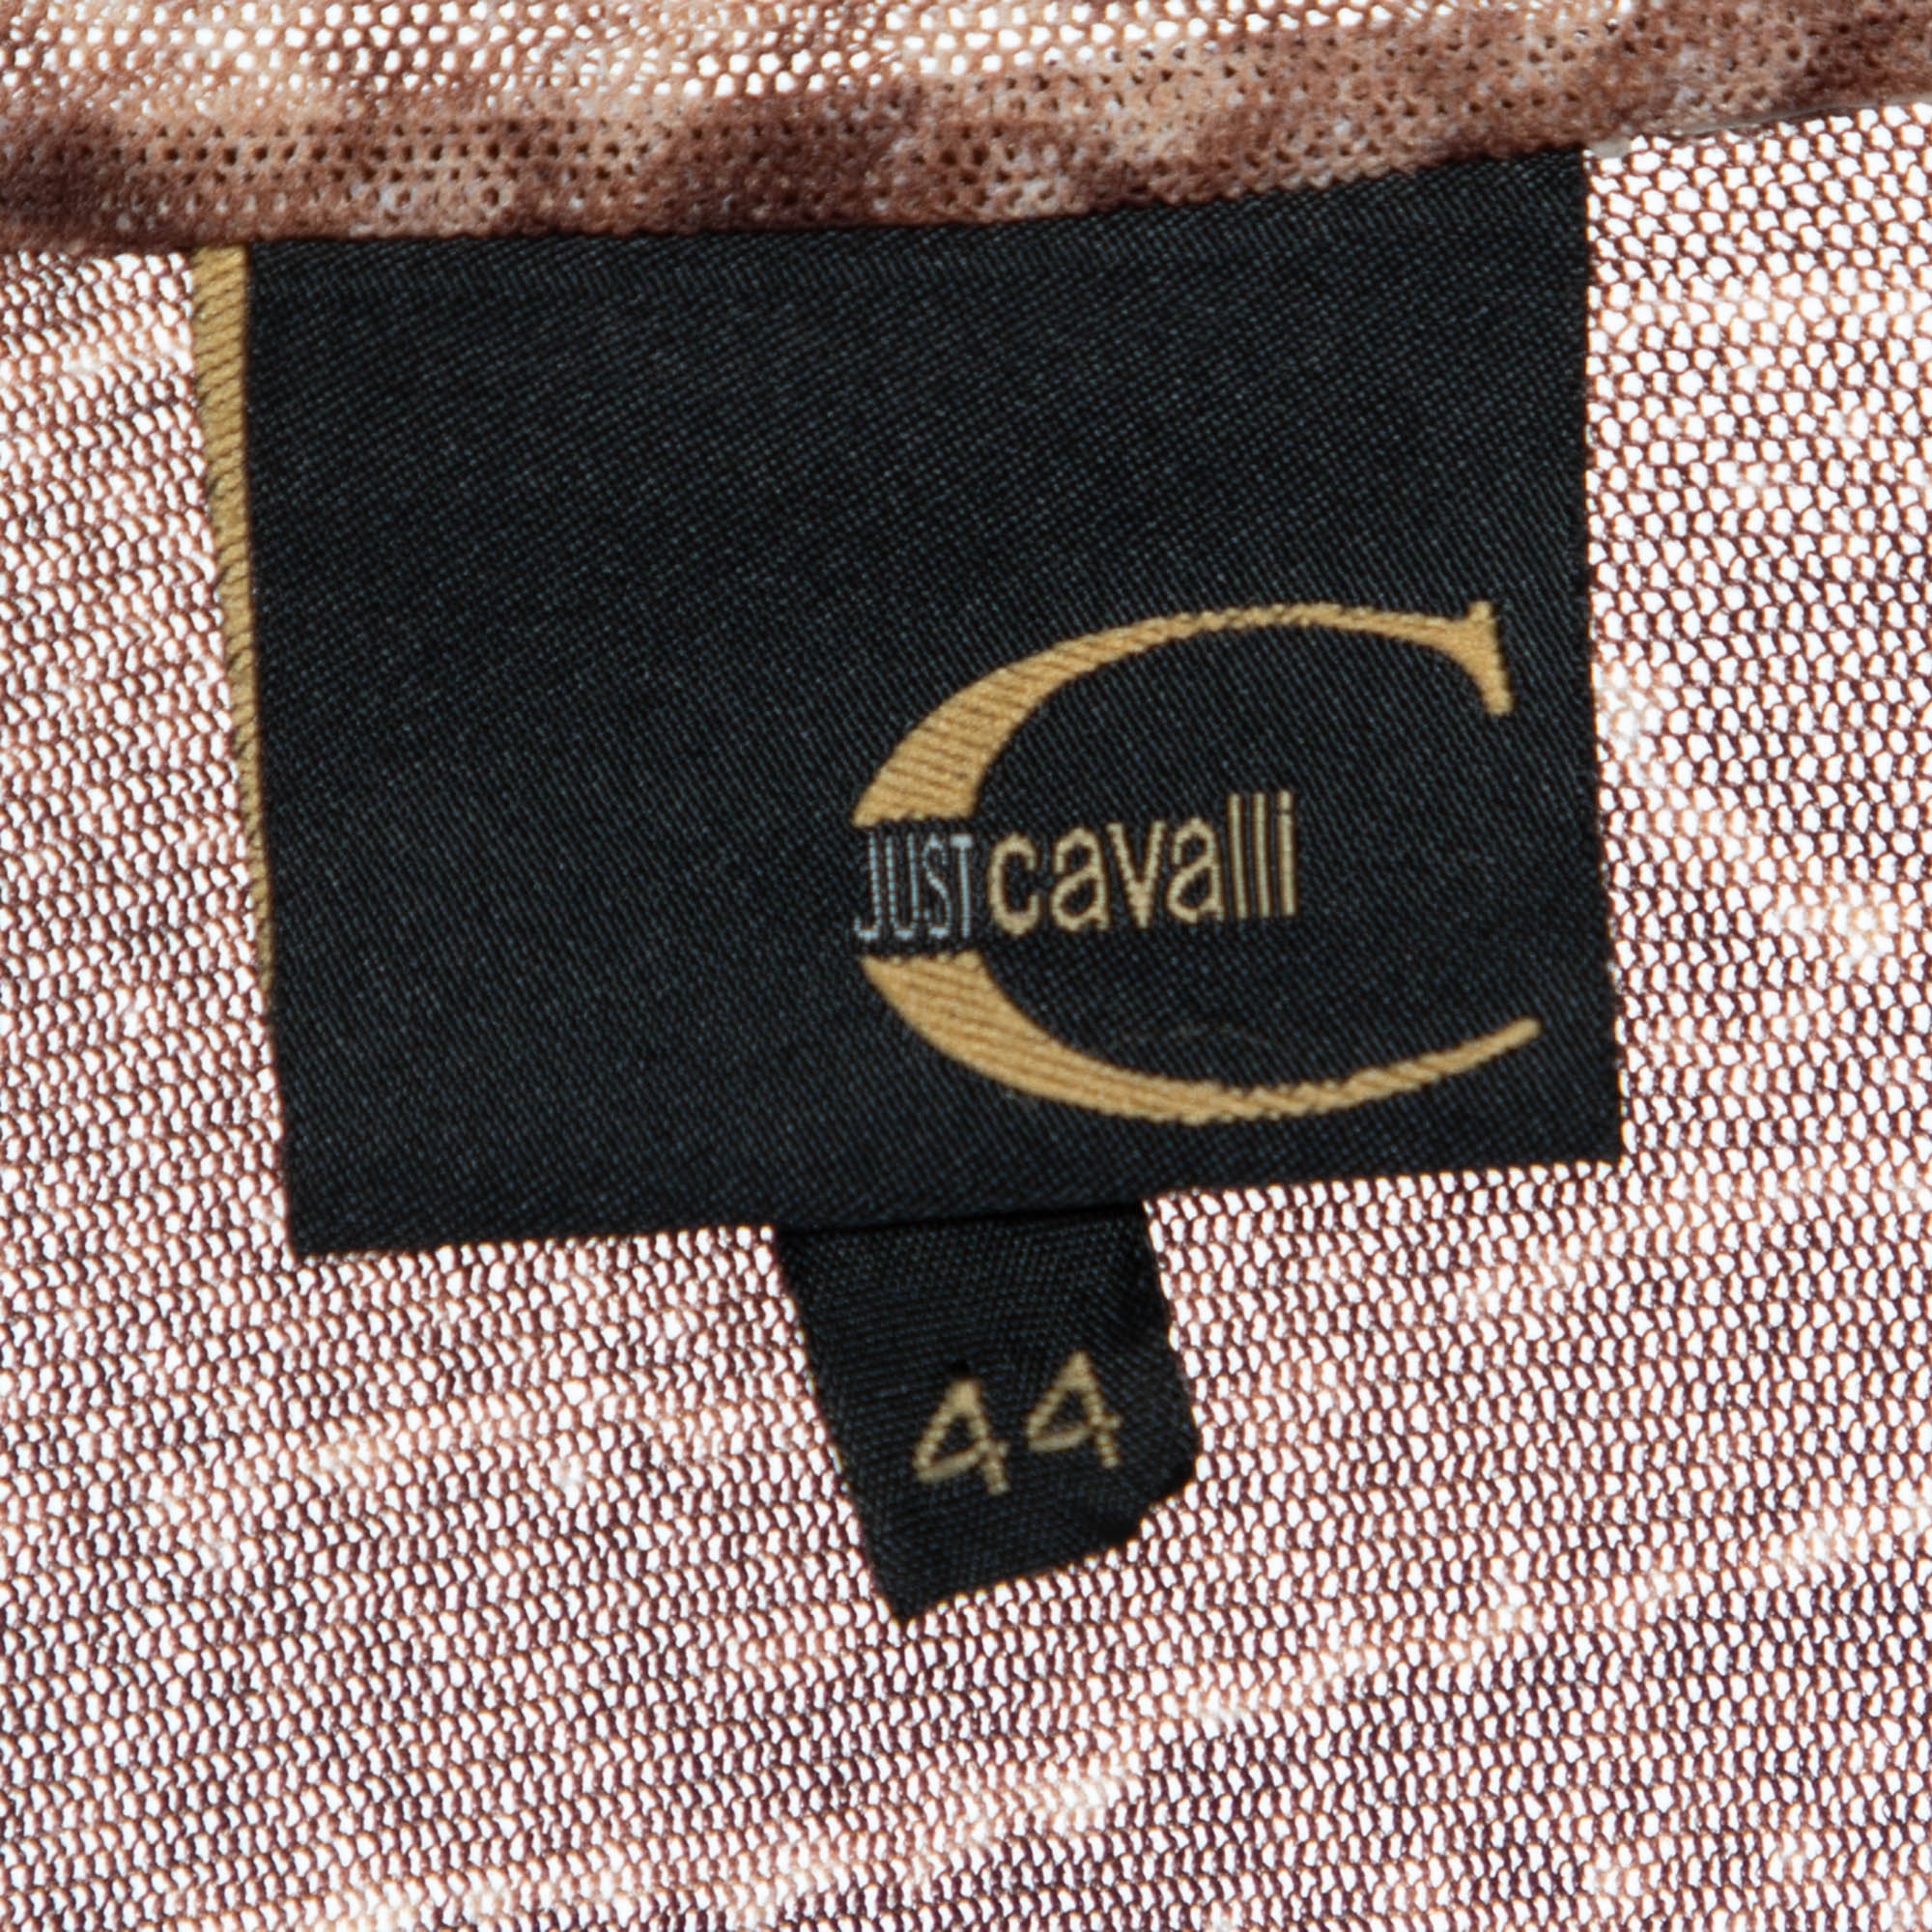 Just Cavalli Burgundy Animal Printed Mesh Knit Top M